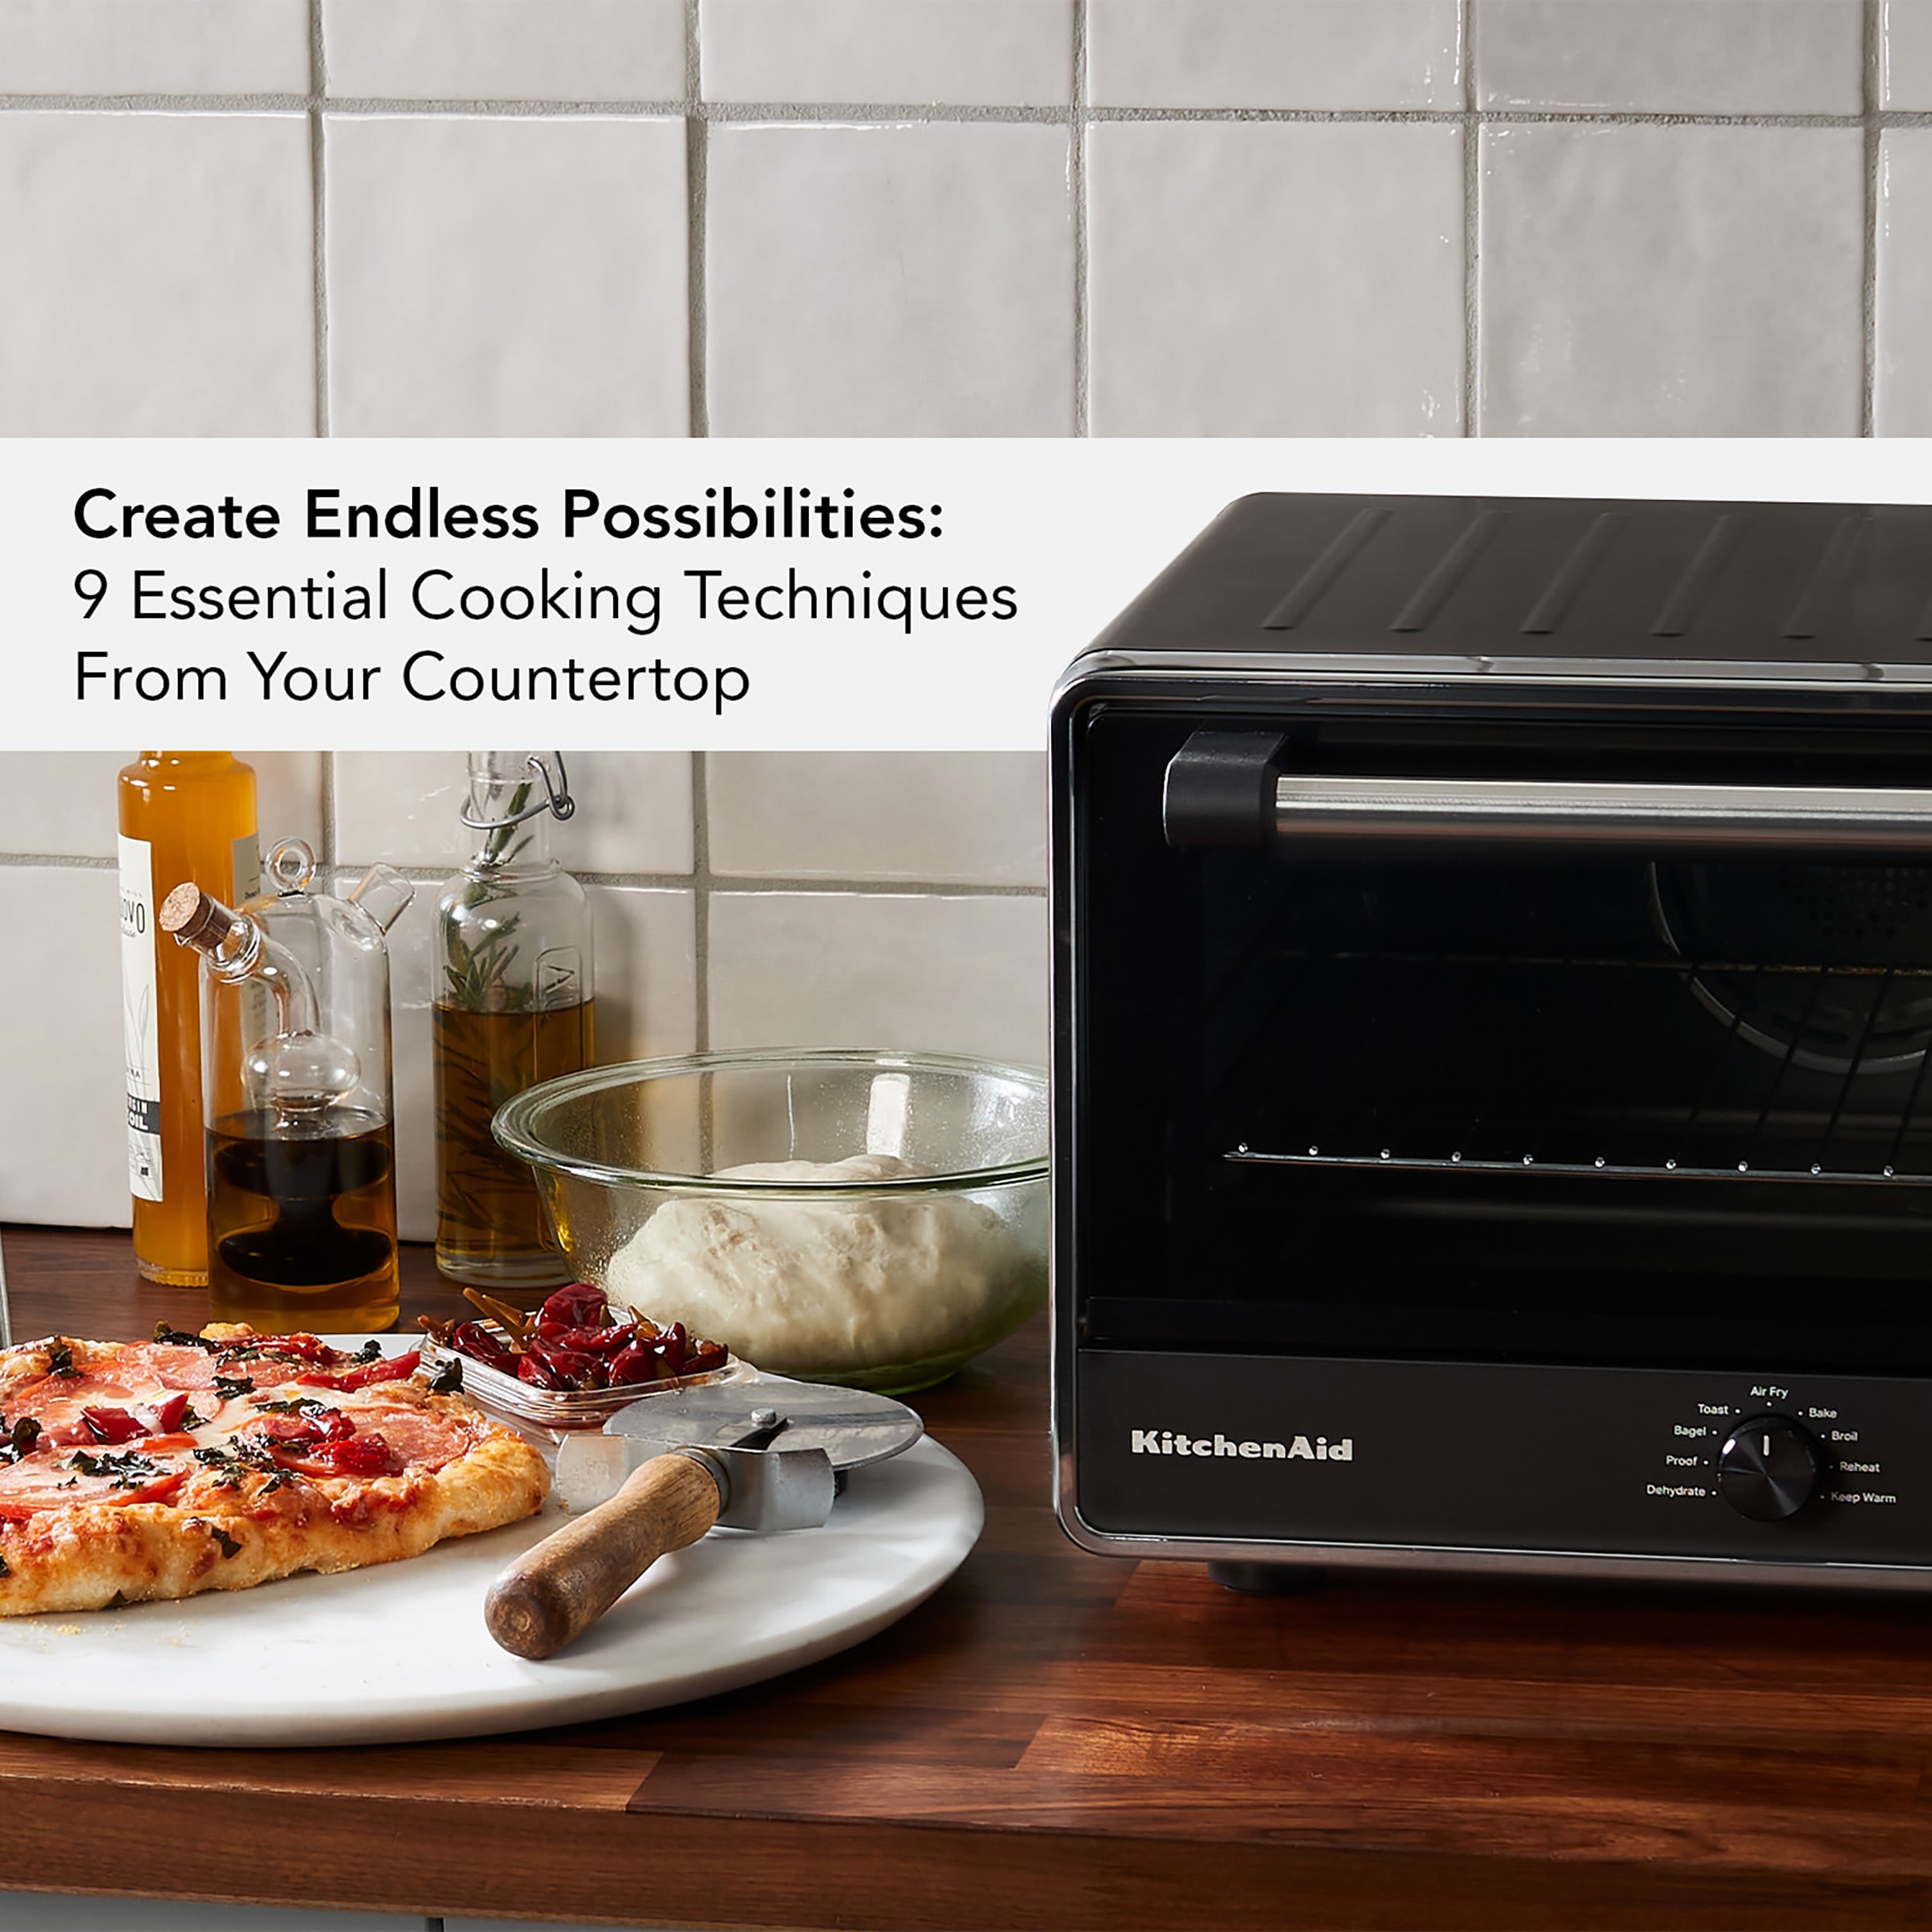 Kitchenaid Digital Countertop Oven With Air Fry - Kco124bm : Target